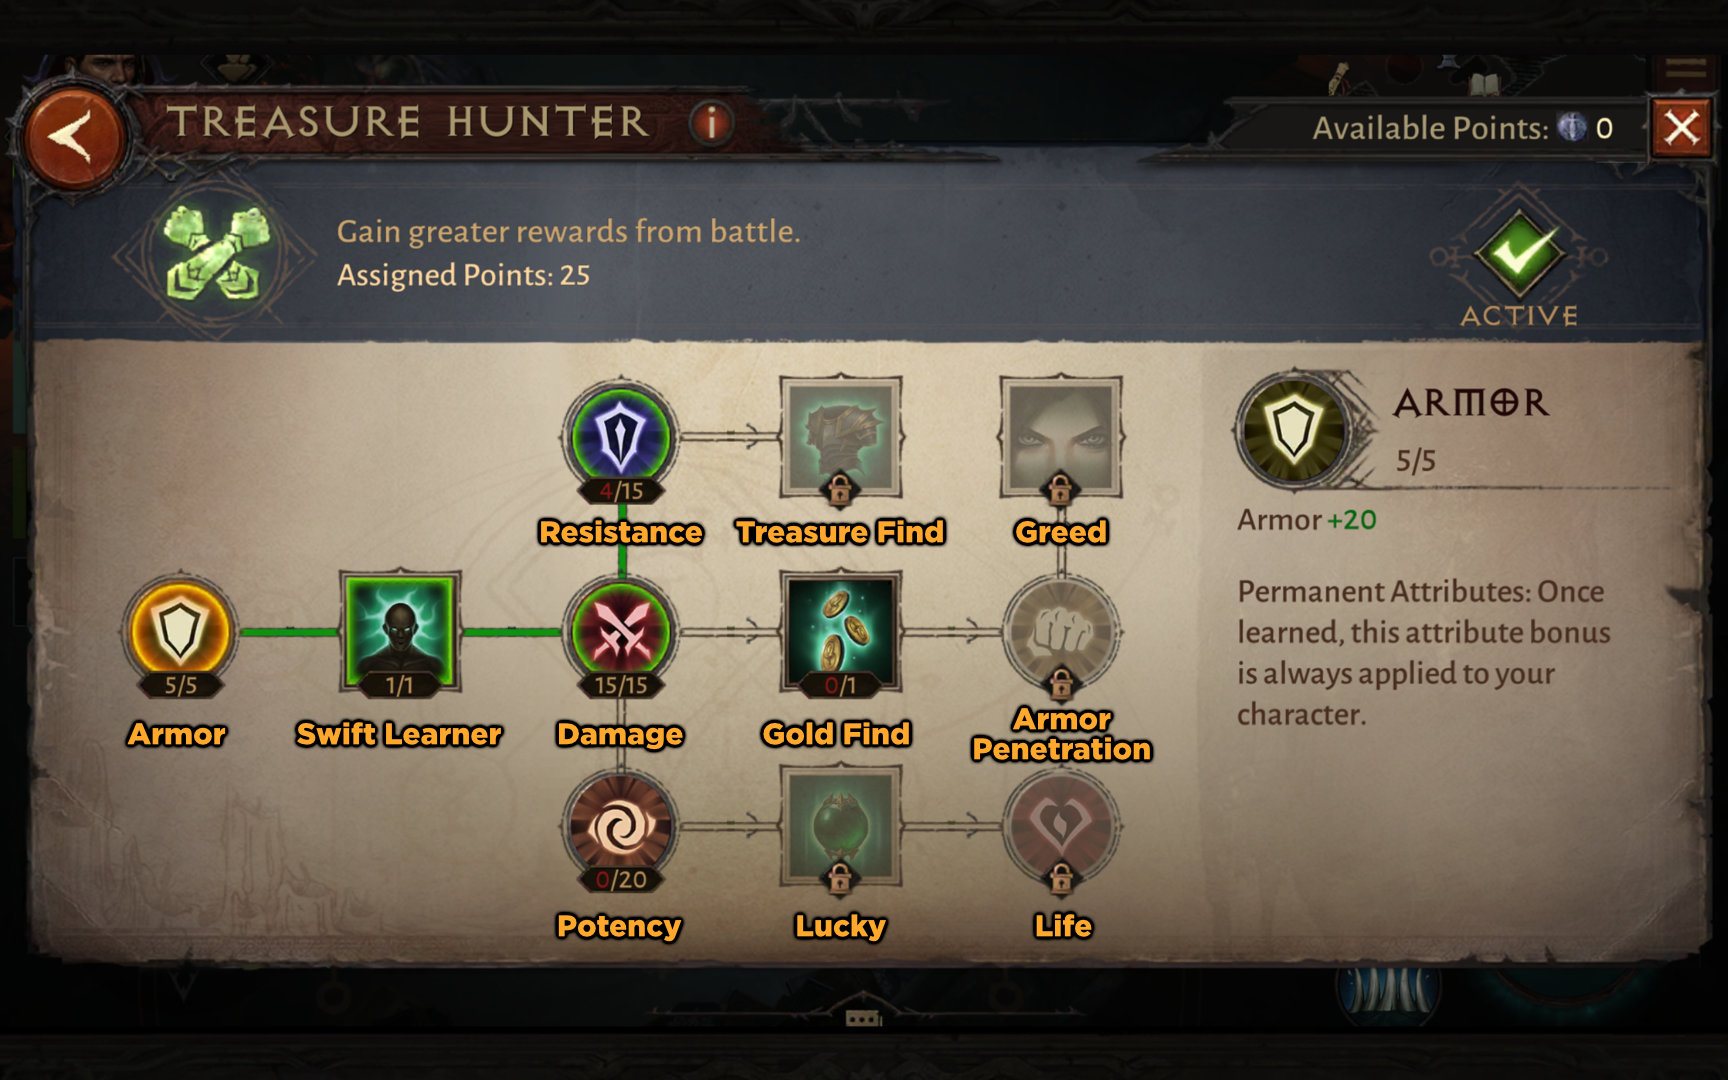 Treasure Hunter Paragon Tree Beta